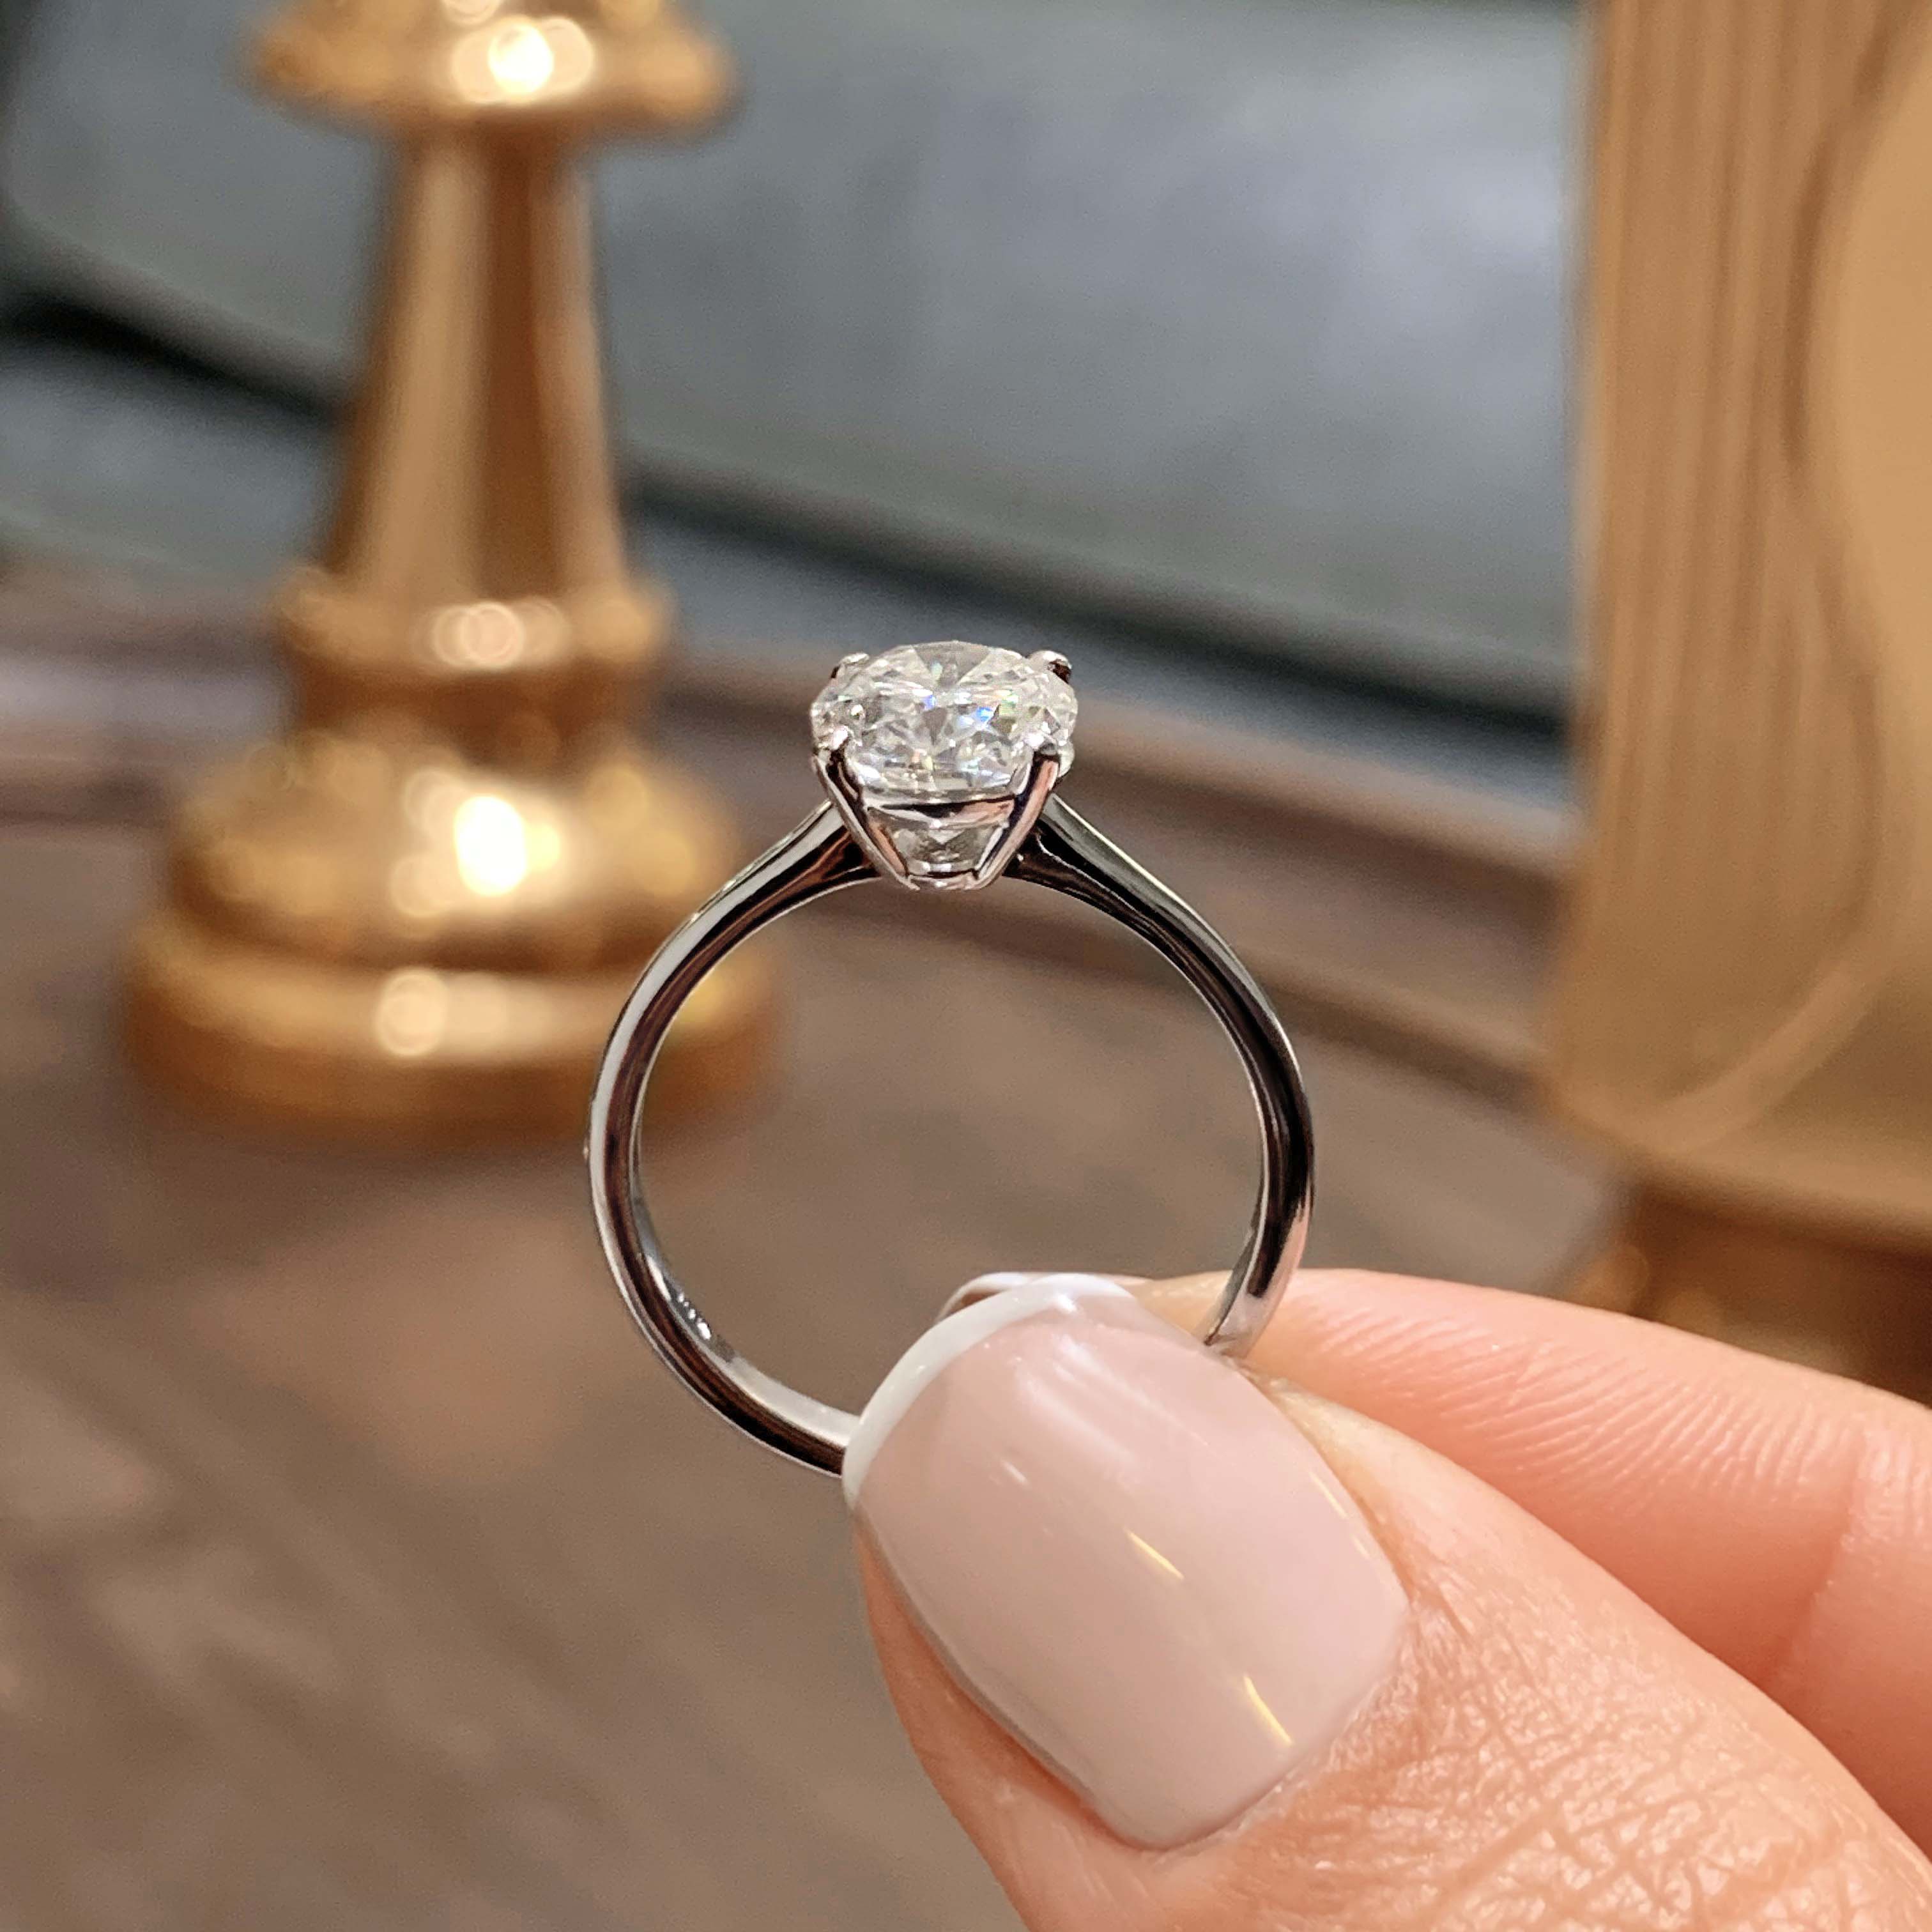 Julia Moissanite Ring   (2.15 Carat) -Platinum